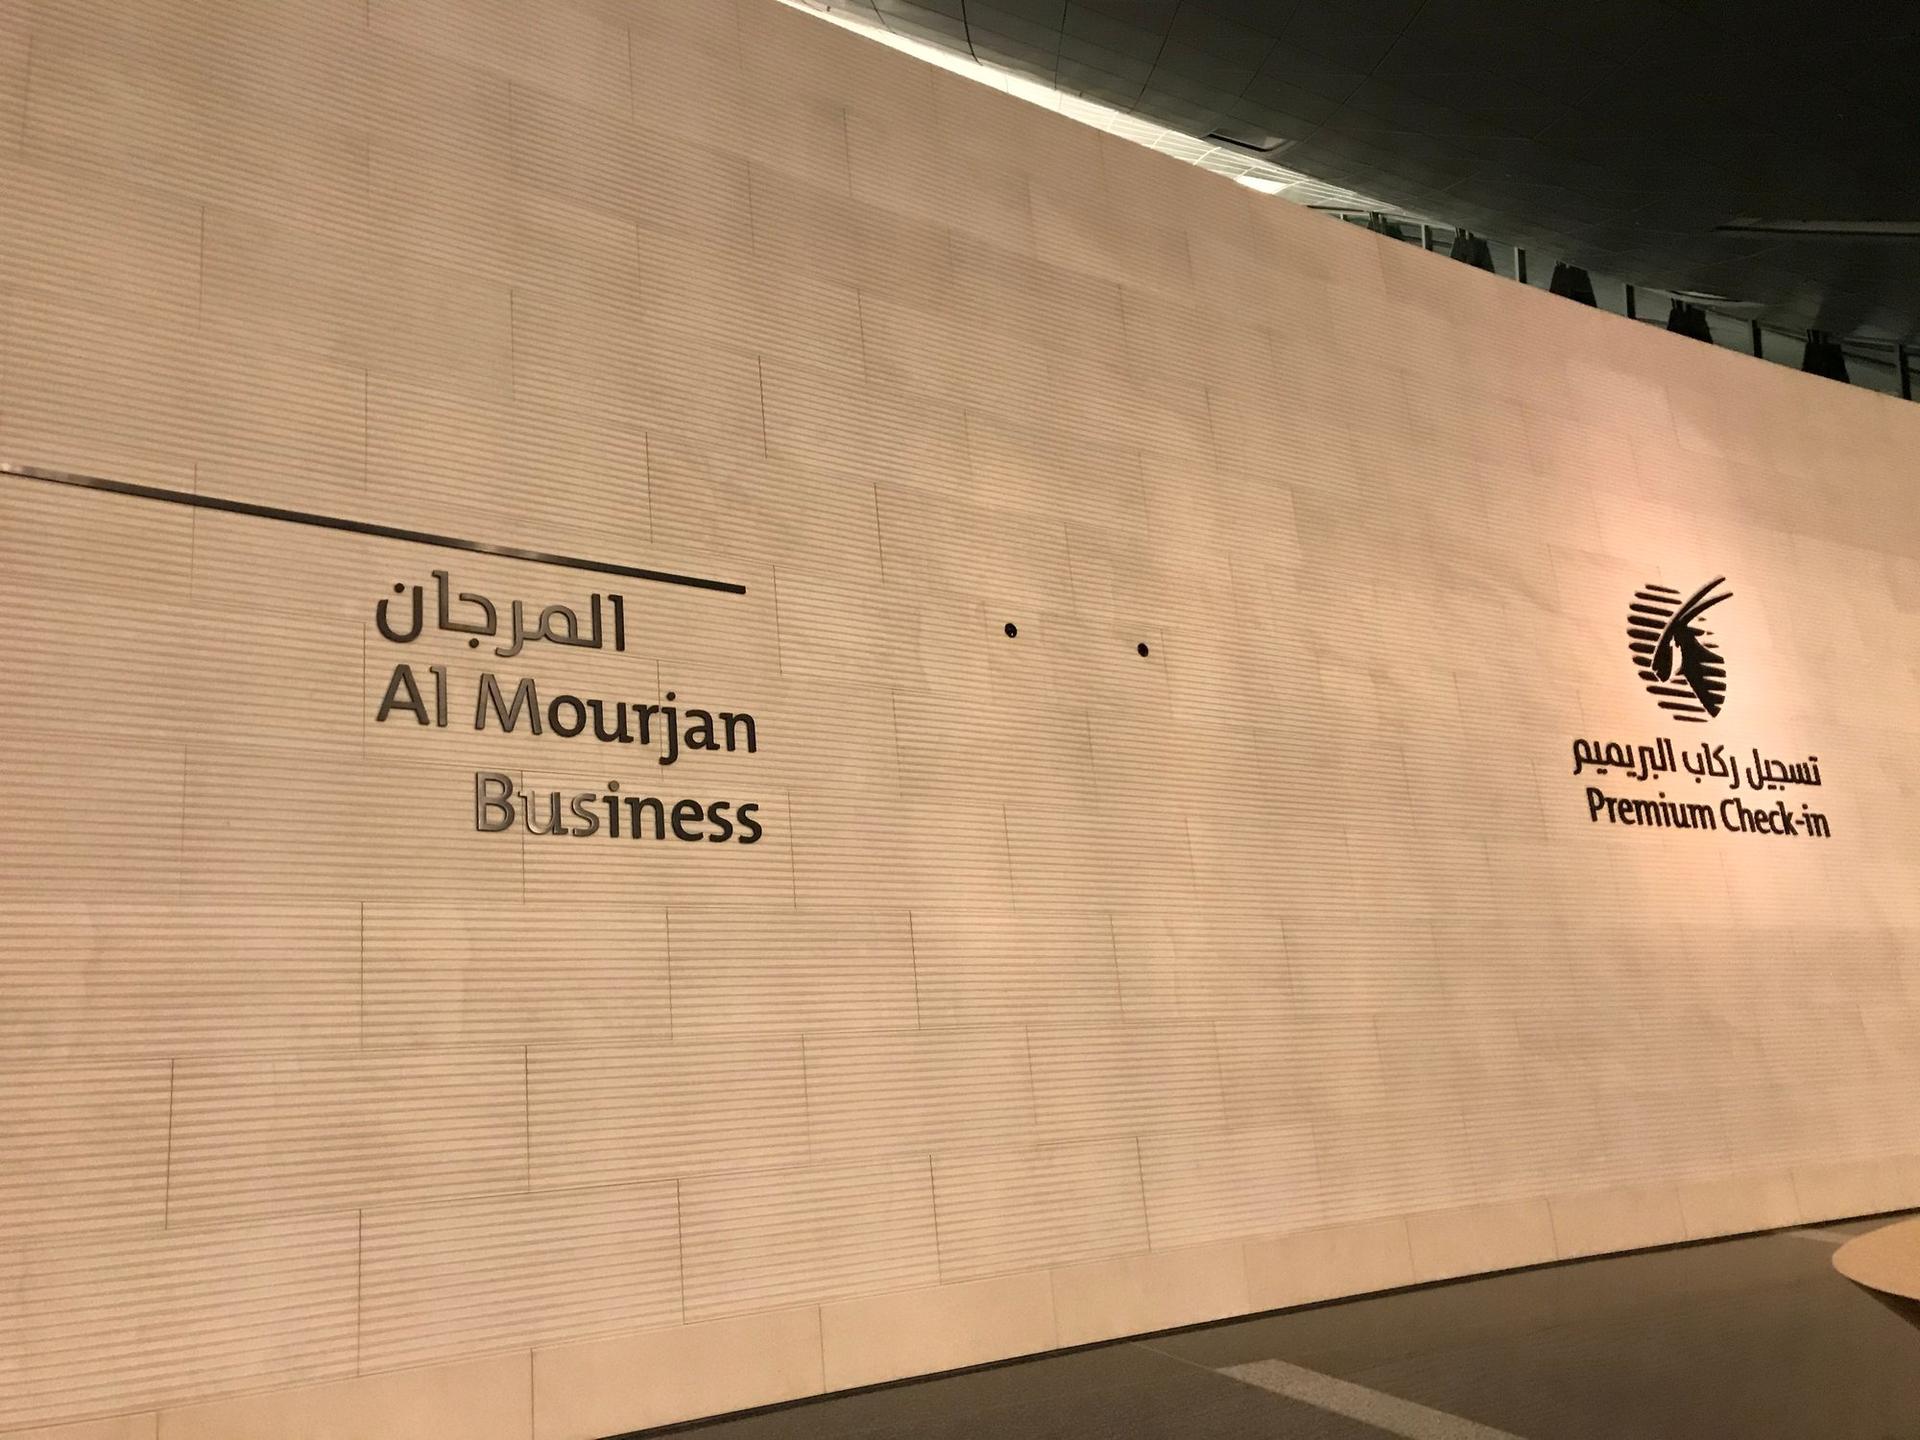 Qatar Airways Al Mourjan Business Class Lounge image 56 of 100